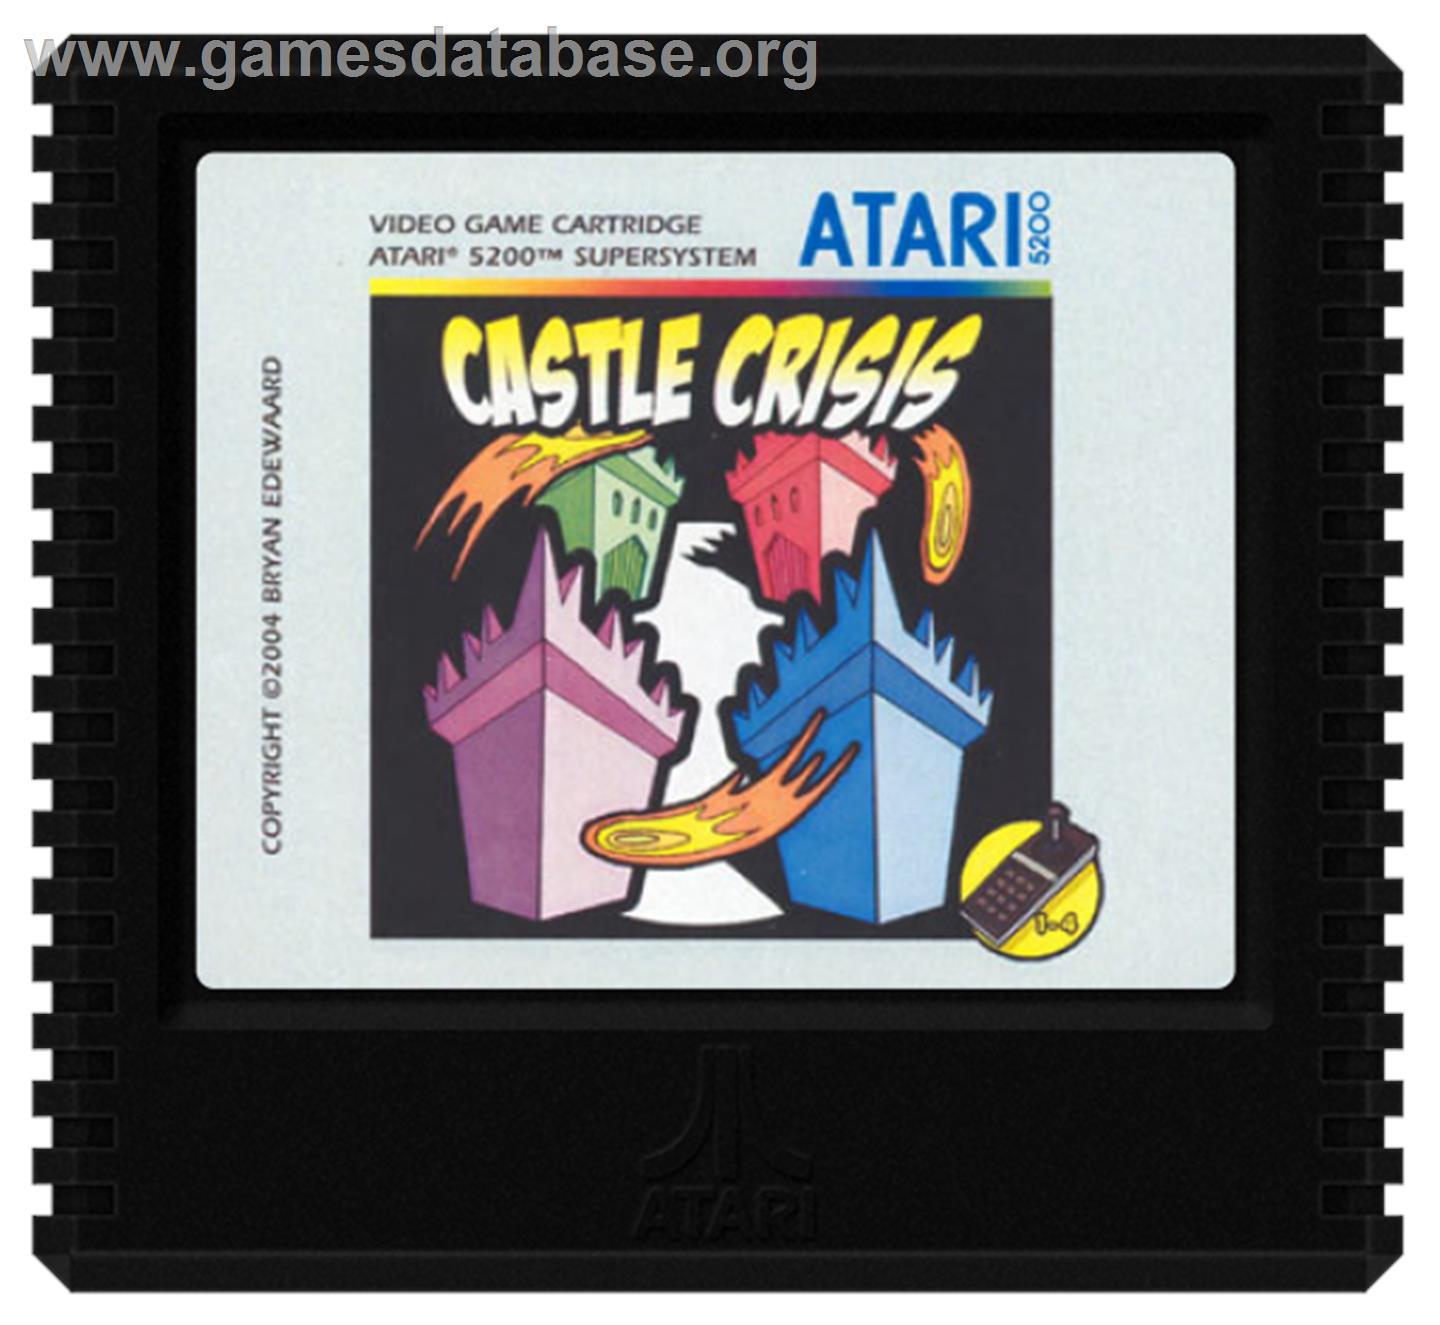 Castle Crisis - Atari 5200 - Artwork - Cartridge